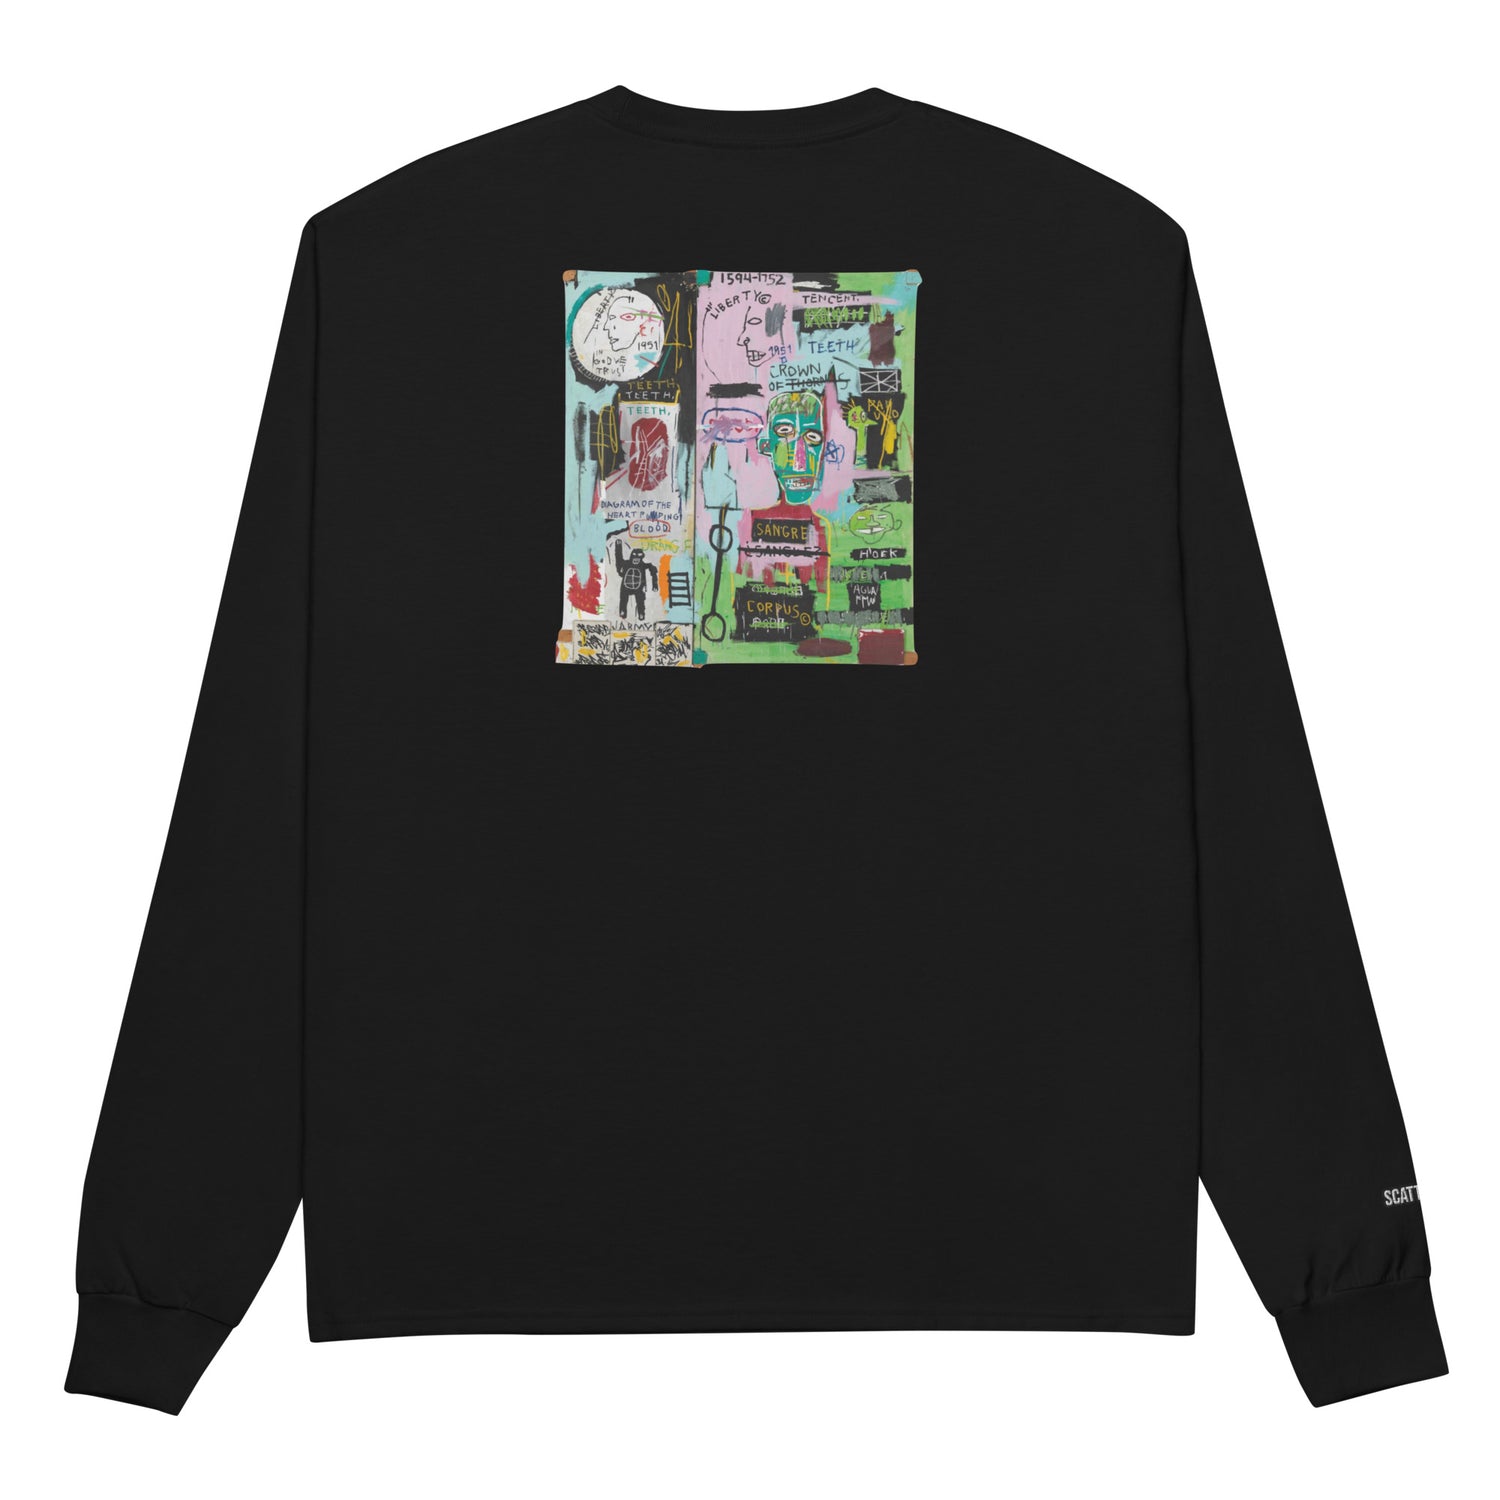 Jean-Michel Basquiat "In Italian" Artwork Printed Premium Black Champion Crewneck Long Sleeve Shirt Scattered Streetwear